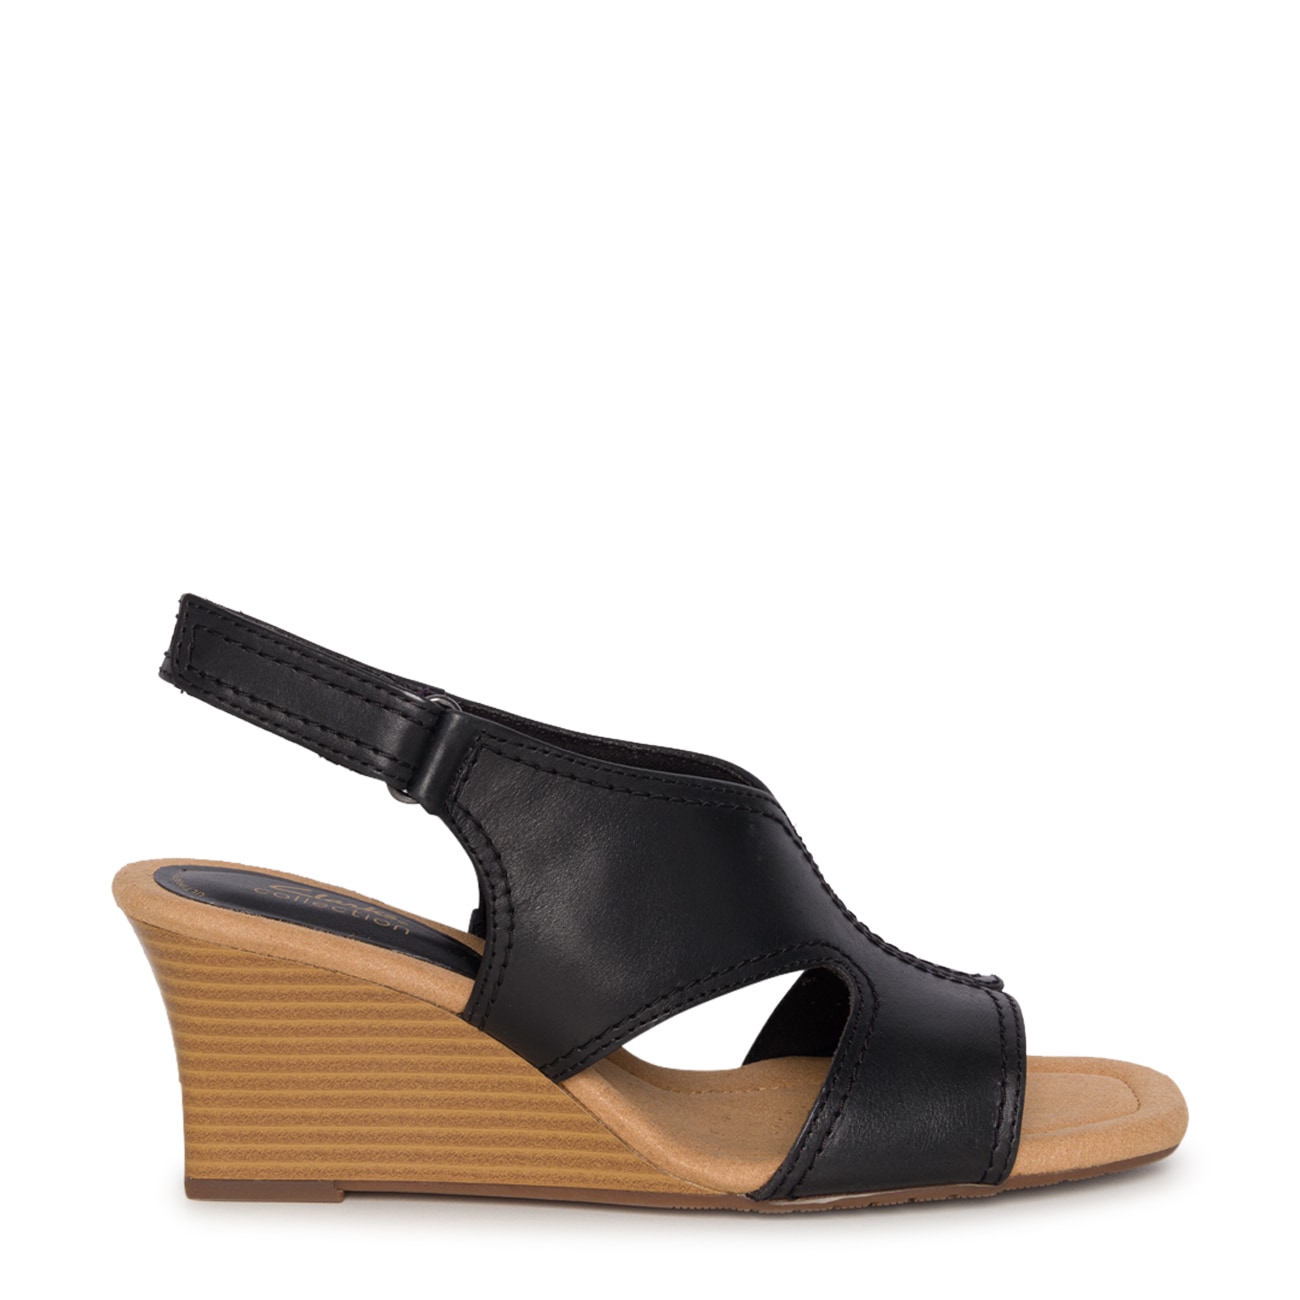 Clarks Women's Kyarra Aster Wedge Sandal | The Shoe Company